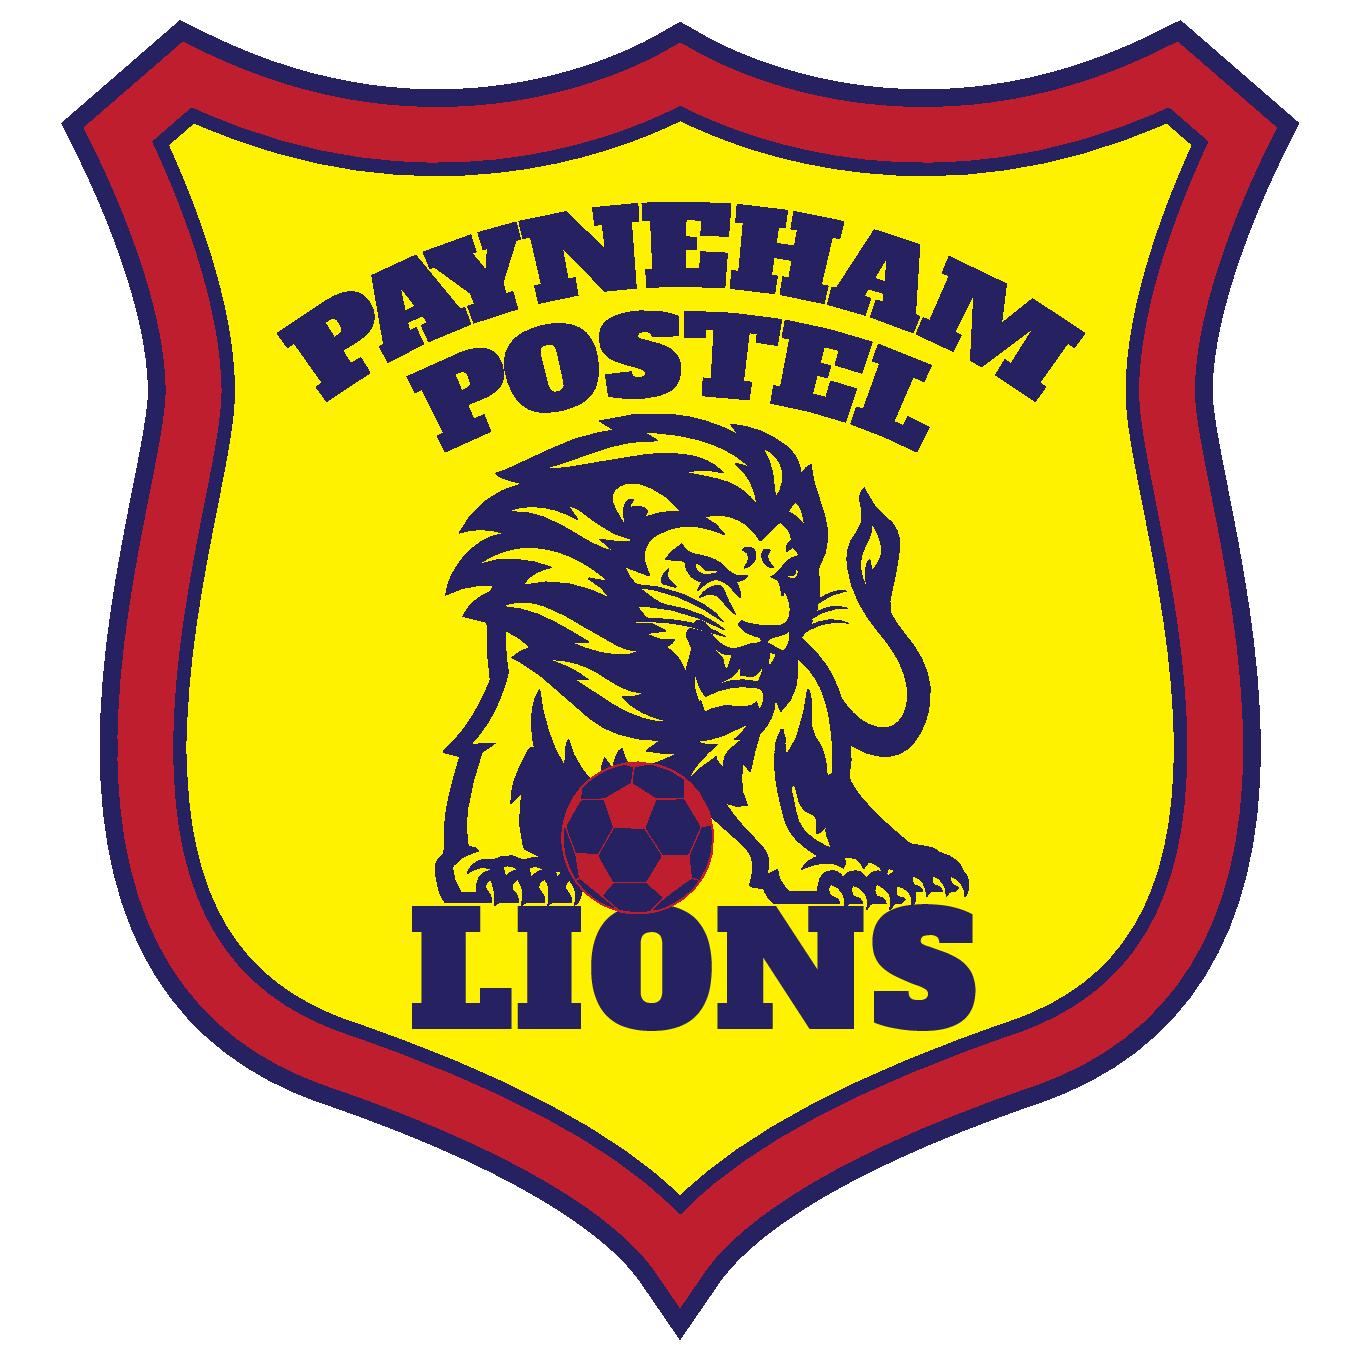 Payneham Postel Lions Soccer Club